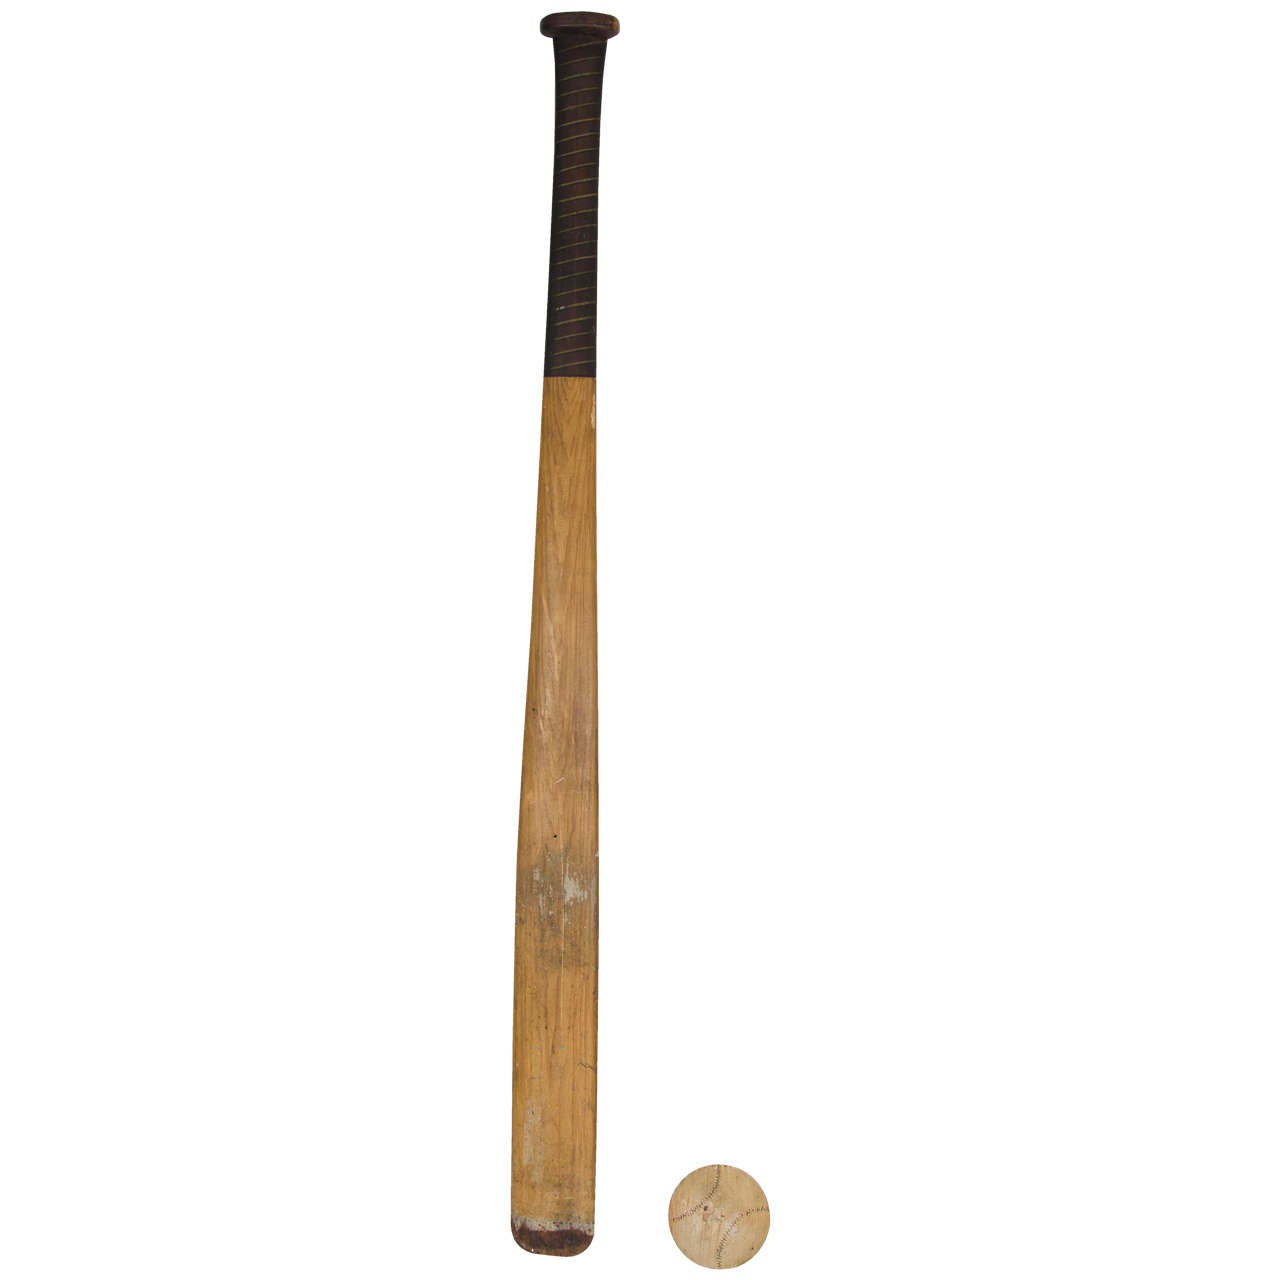 Wooden Baseball Bat and Ball